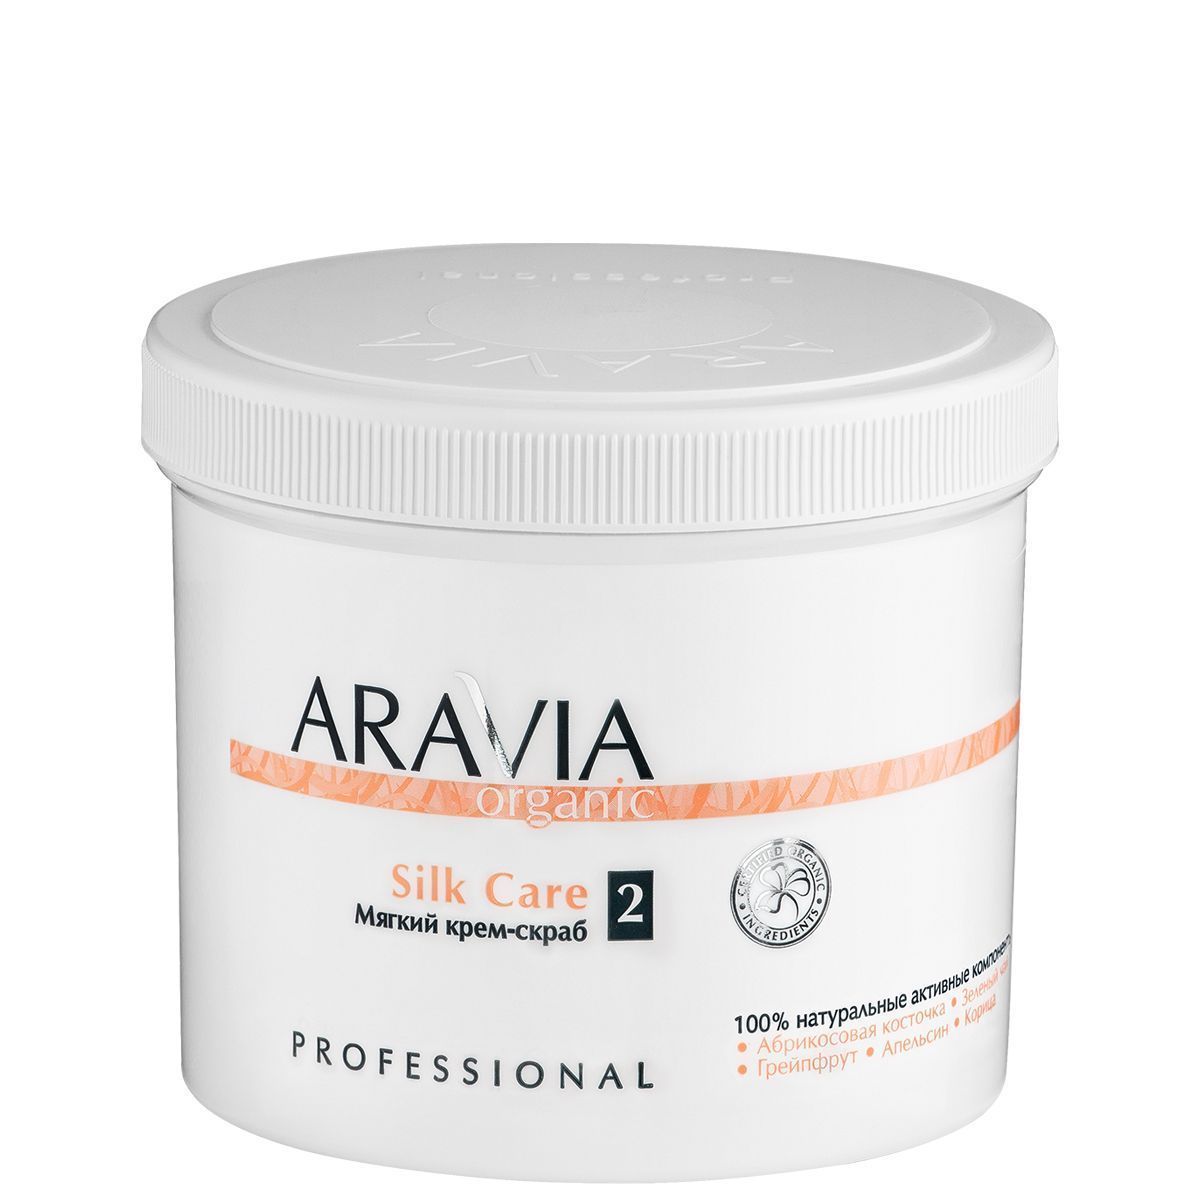 Aravia Organic Мягкий крем-скраб Silk Care, 550мл